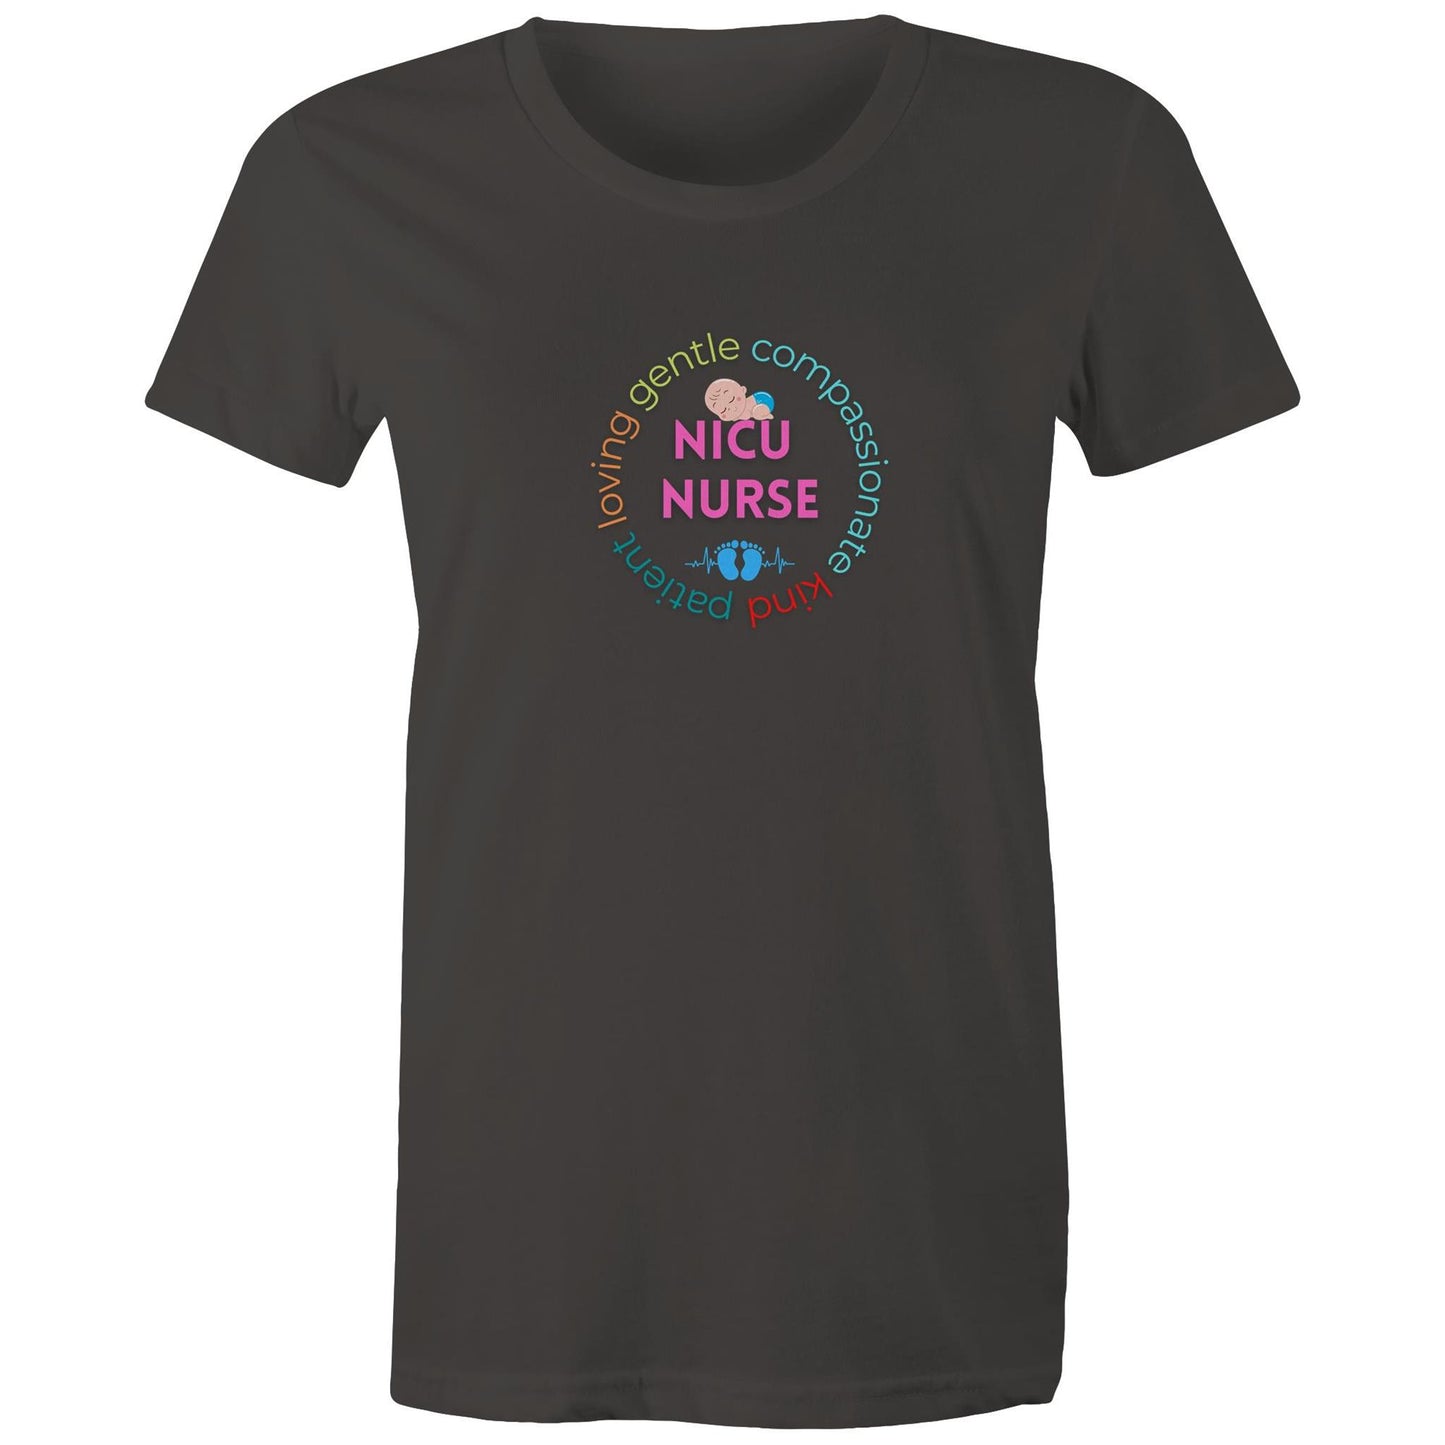 NICU Nurse Women's Maple Tee